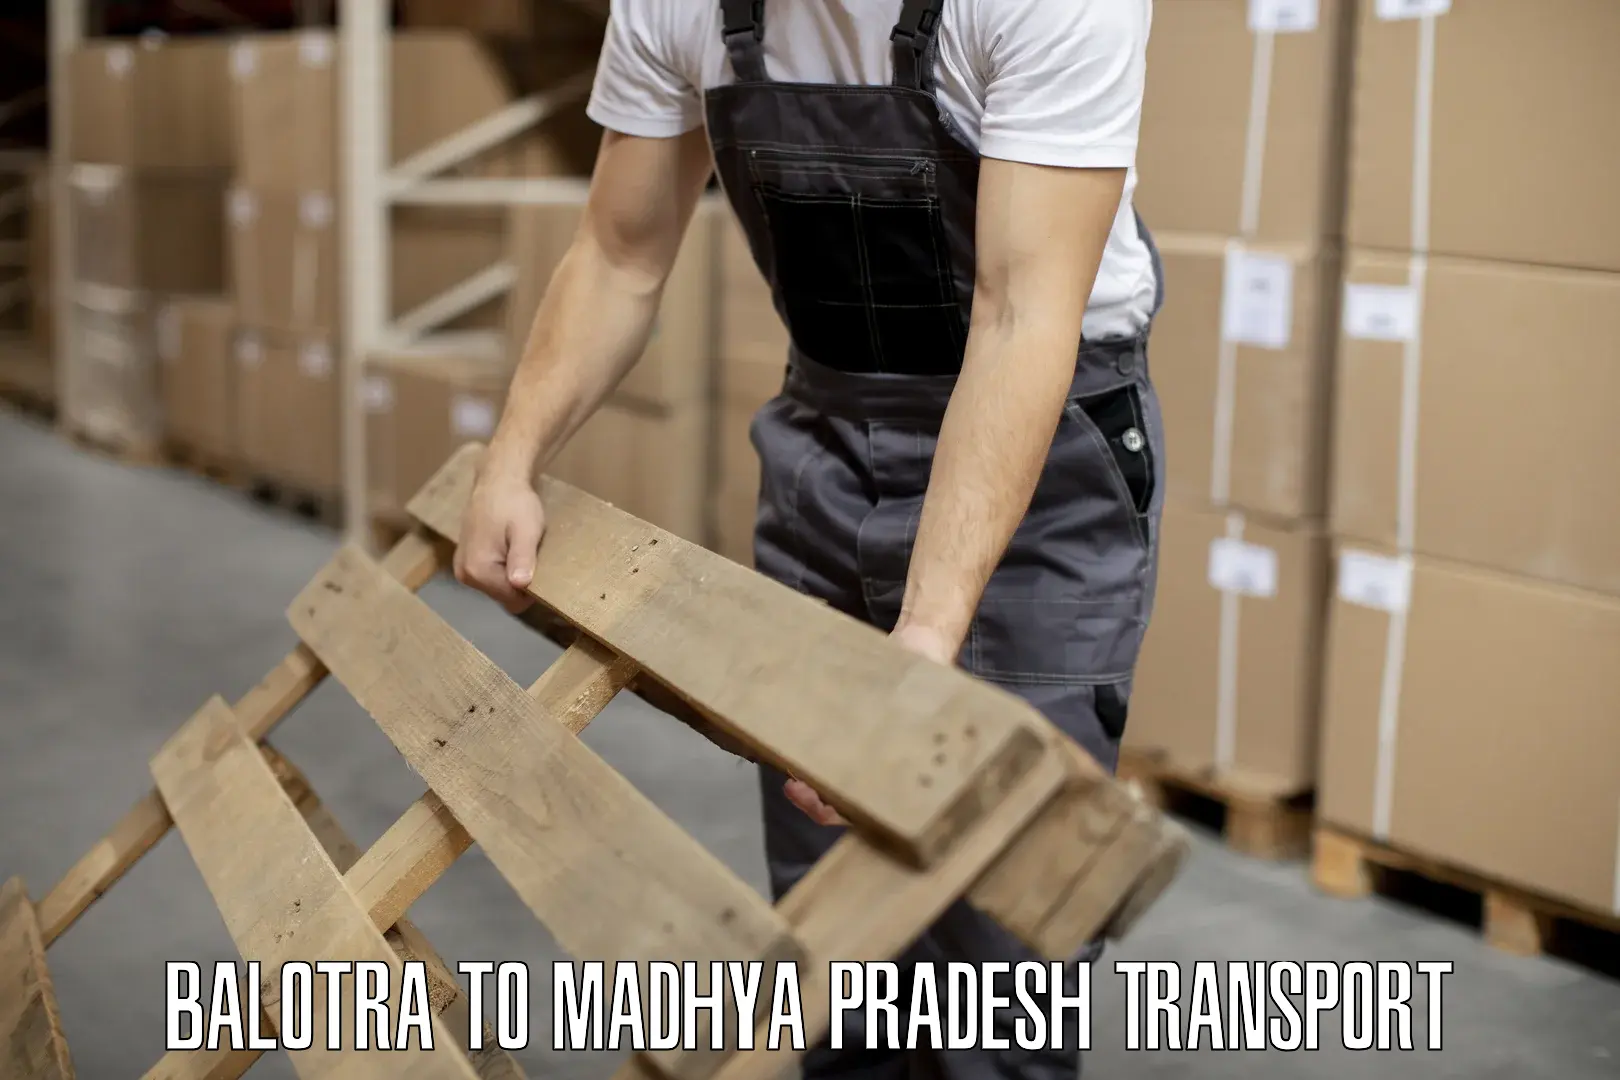 Delivery service Balotra to Ranchha